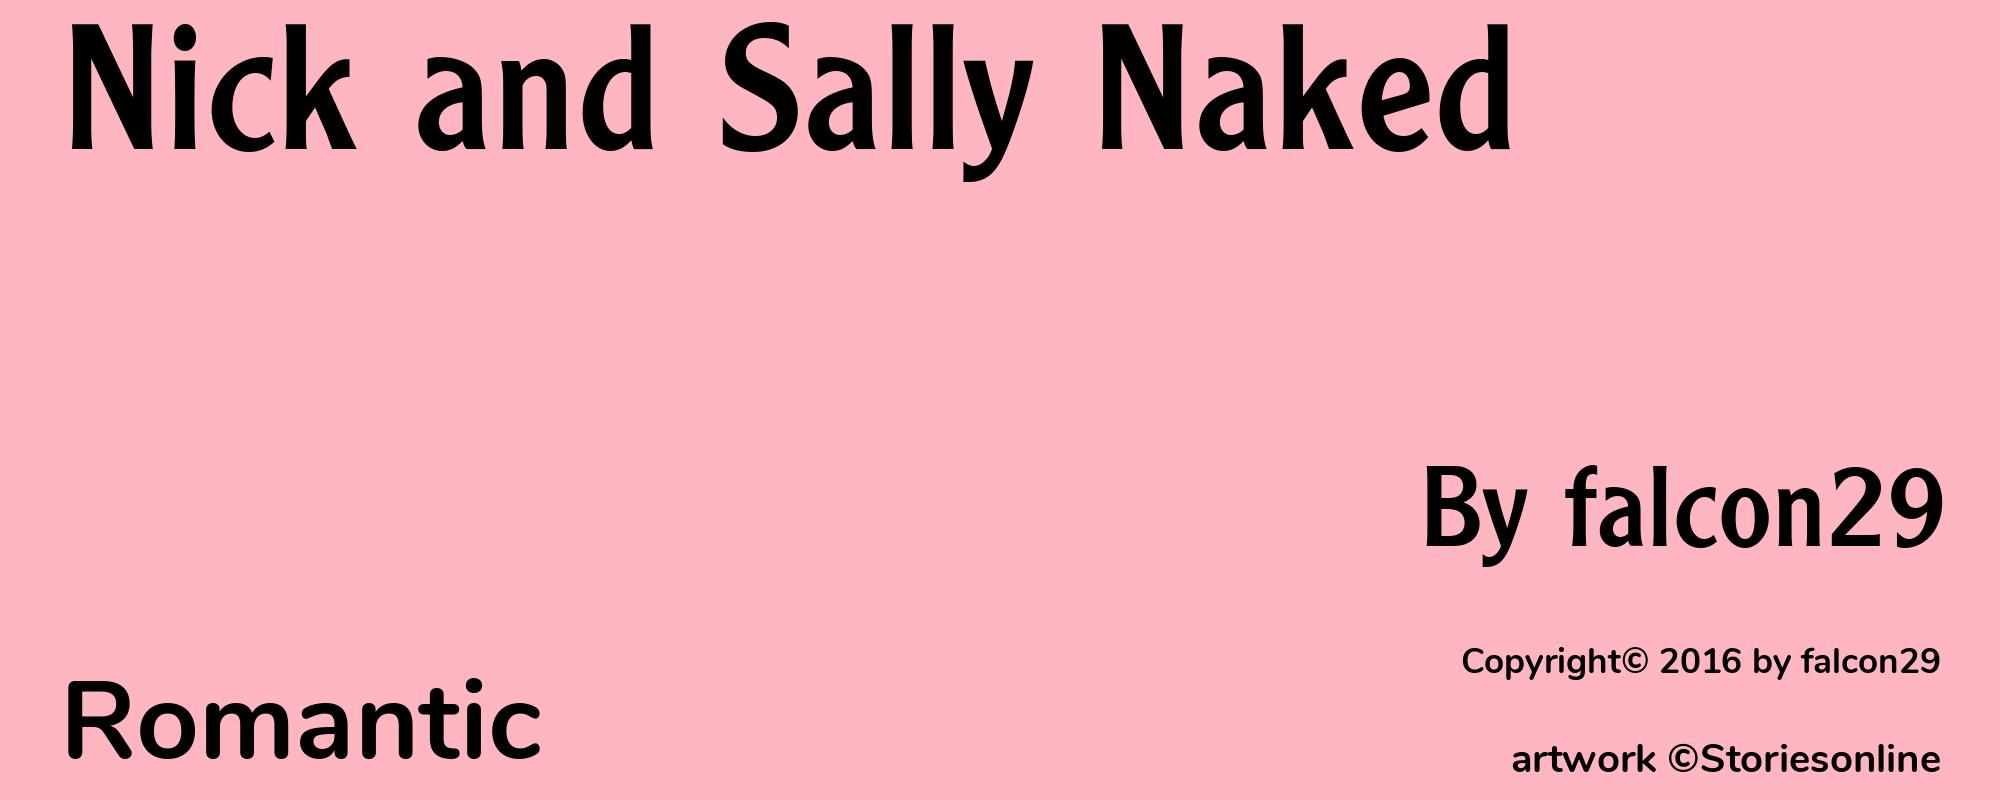 Nick and Sally Naked - Cover